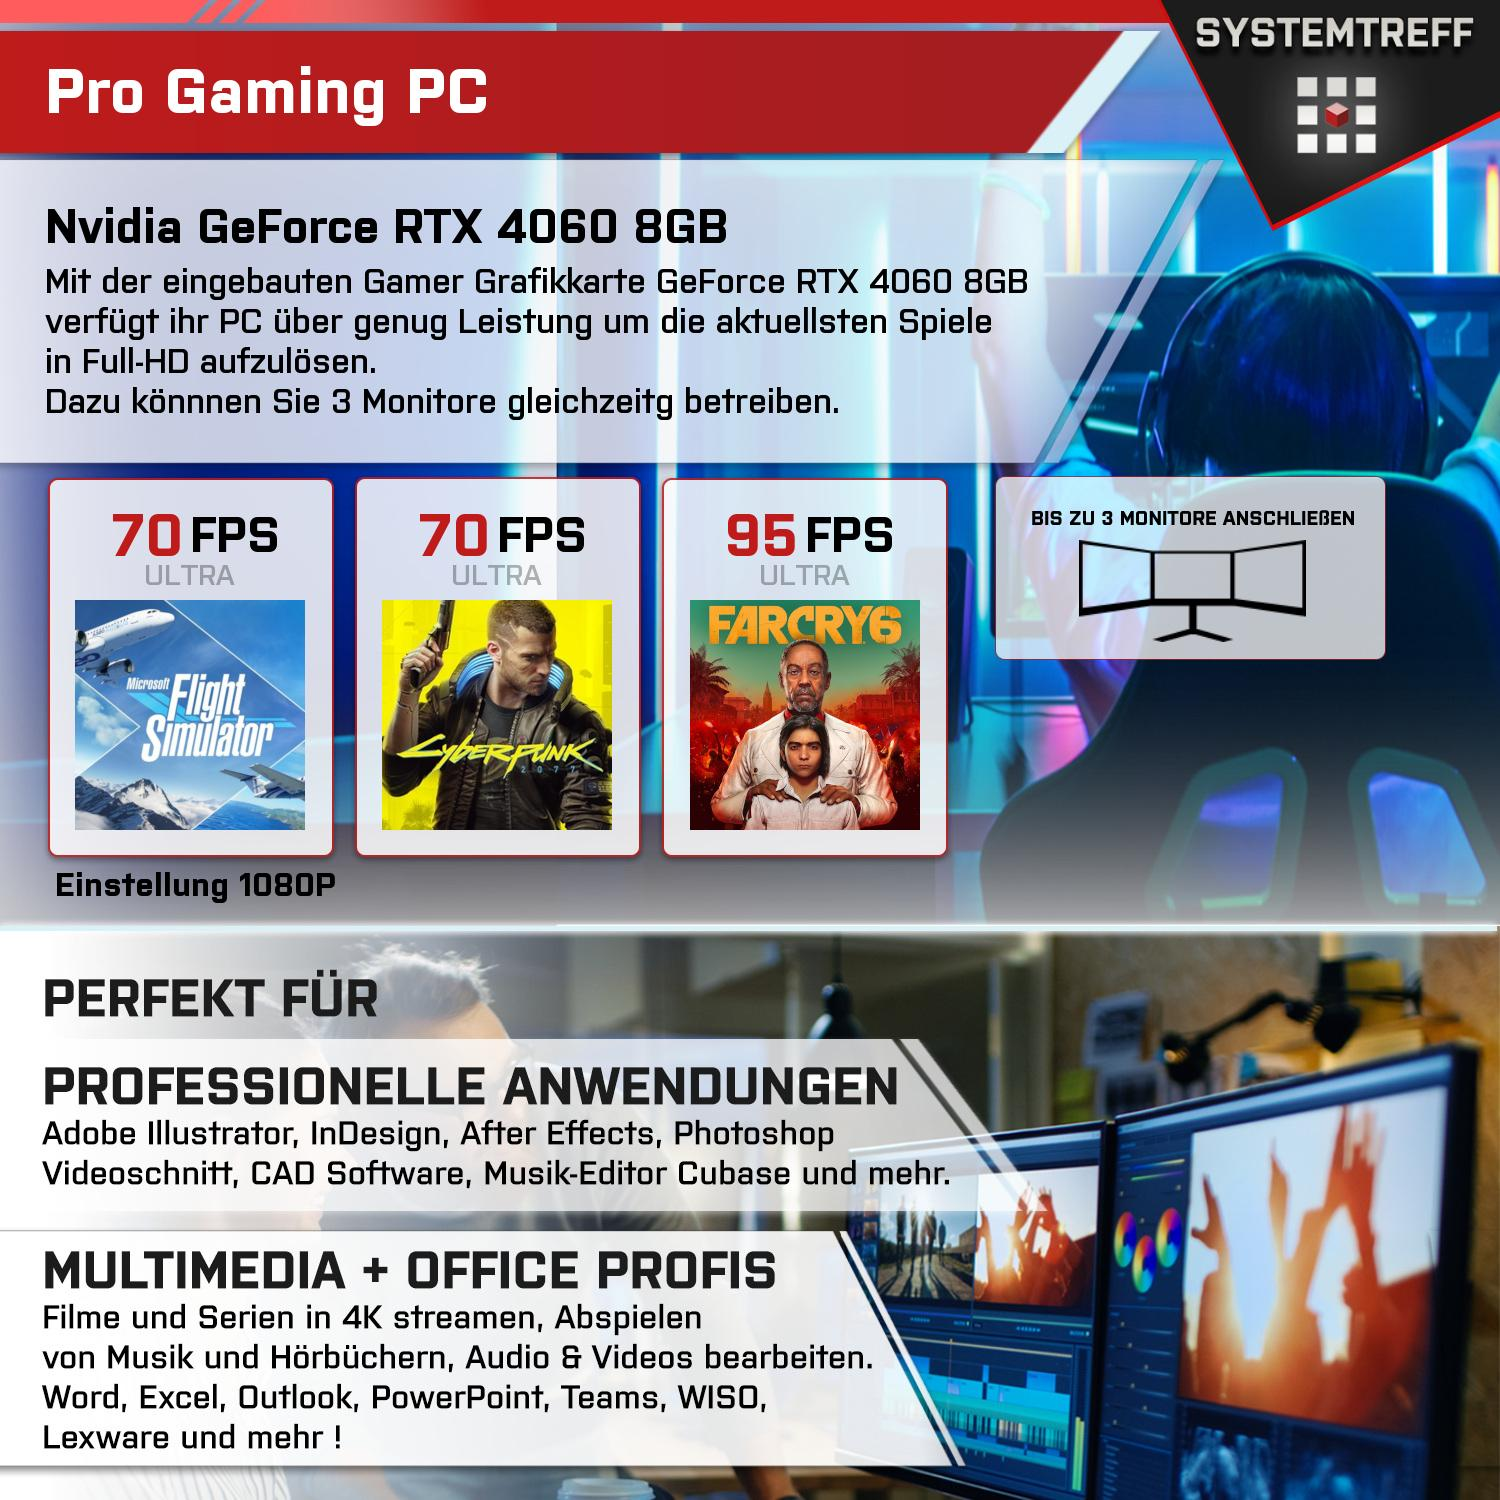 SYSTEMTREFF Pro Gaming Windows Ryzen™ PC 1000 Gaming Ryzen 32 5950X, GeForce RTX™ 9 GB AMD RAM, mit mSSD, AMD 4060 NVIDIA Pro, 9 GB Prozessor, 11